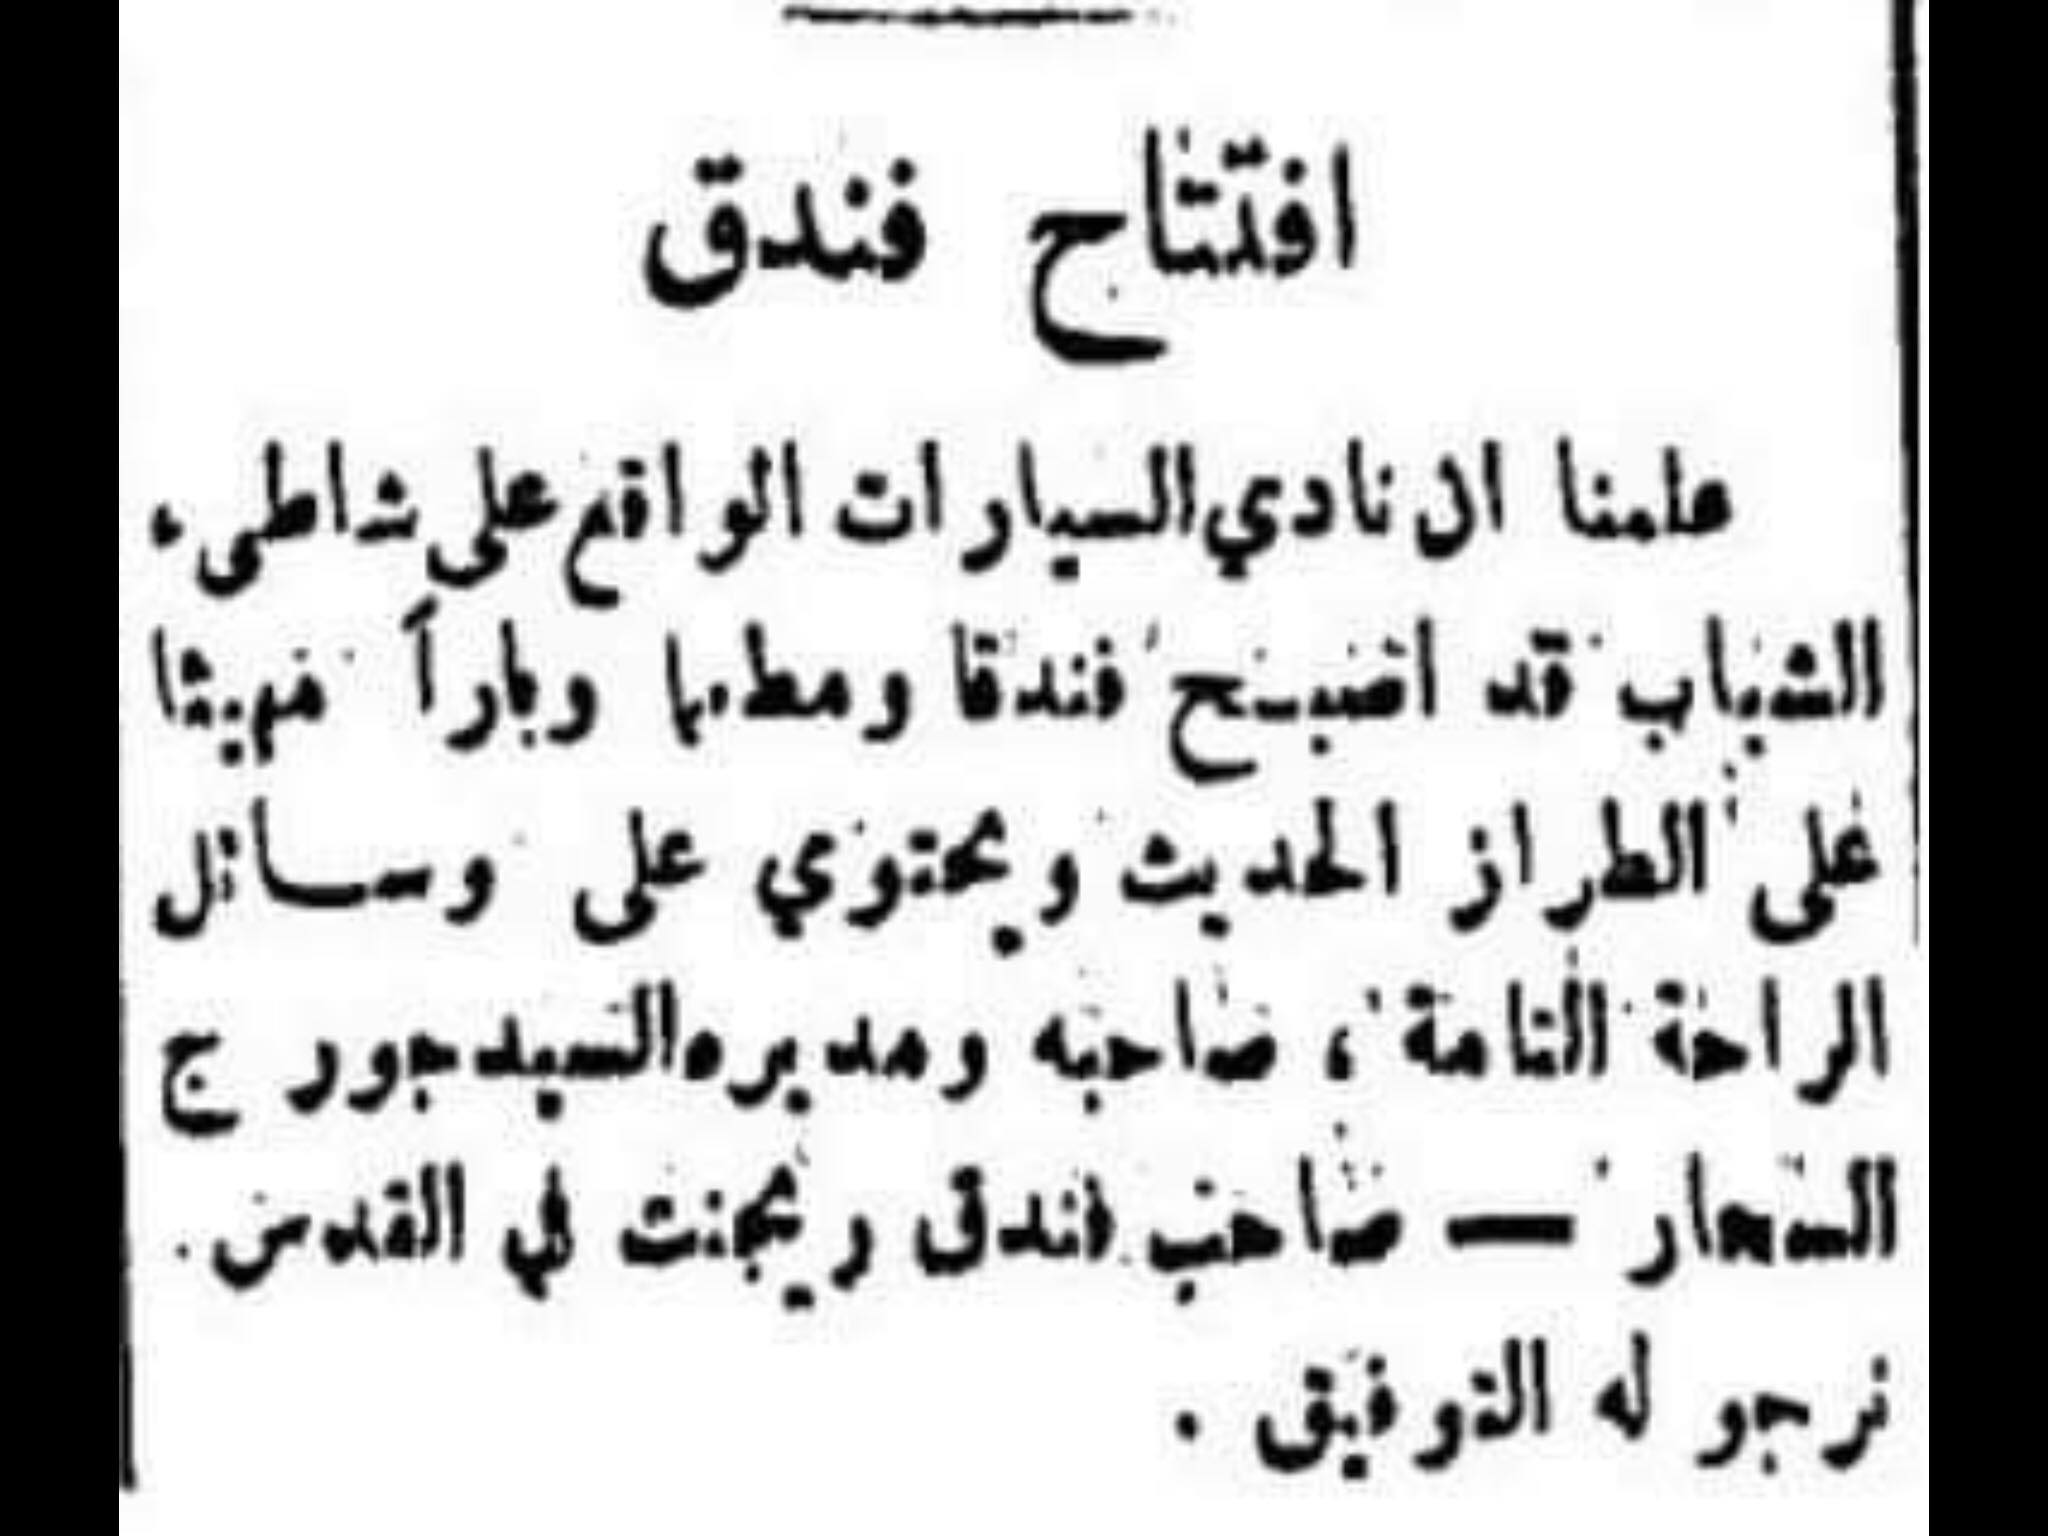 Arabic printed text